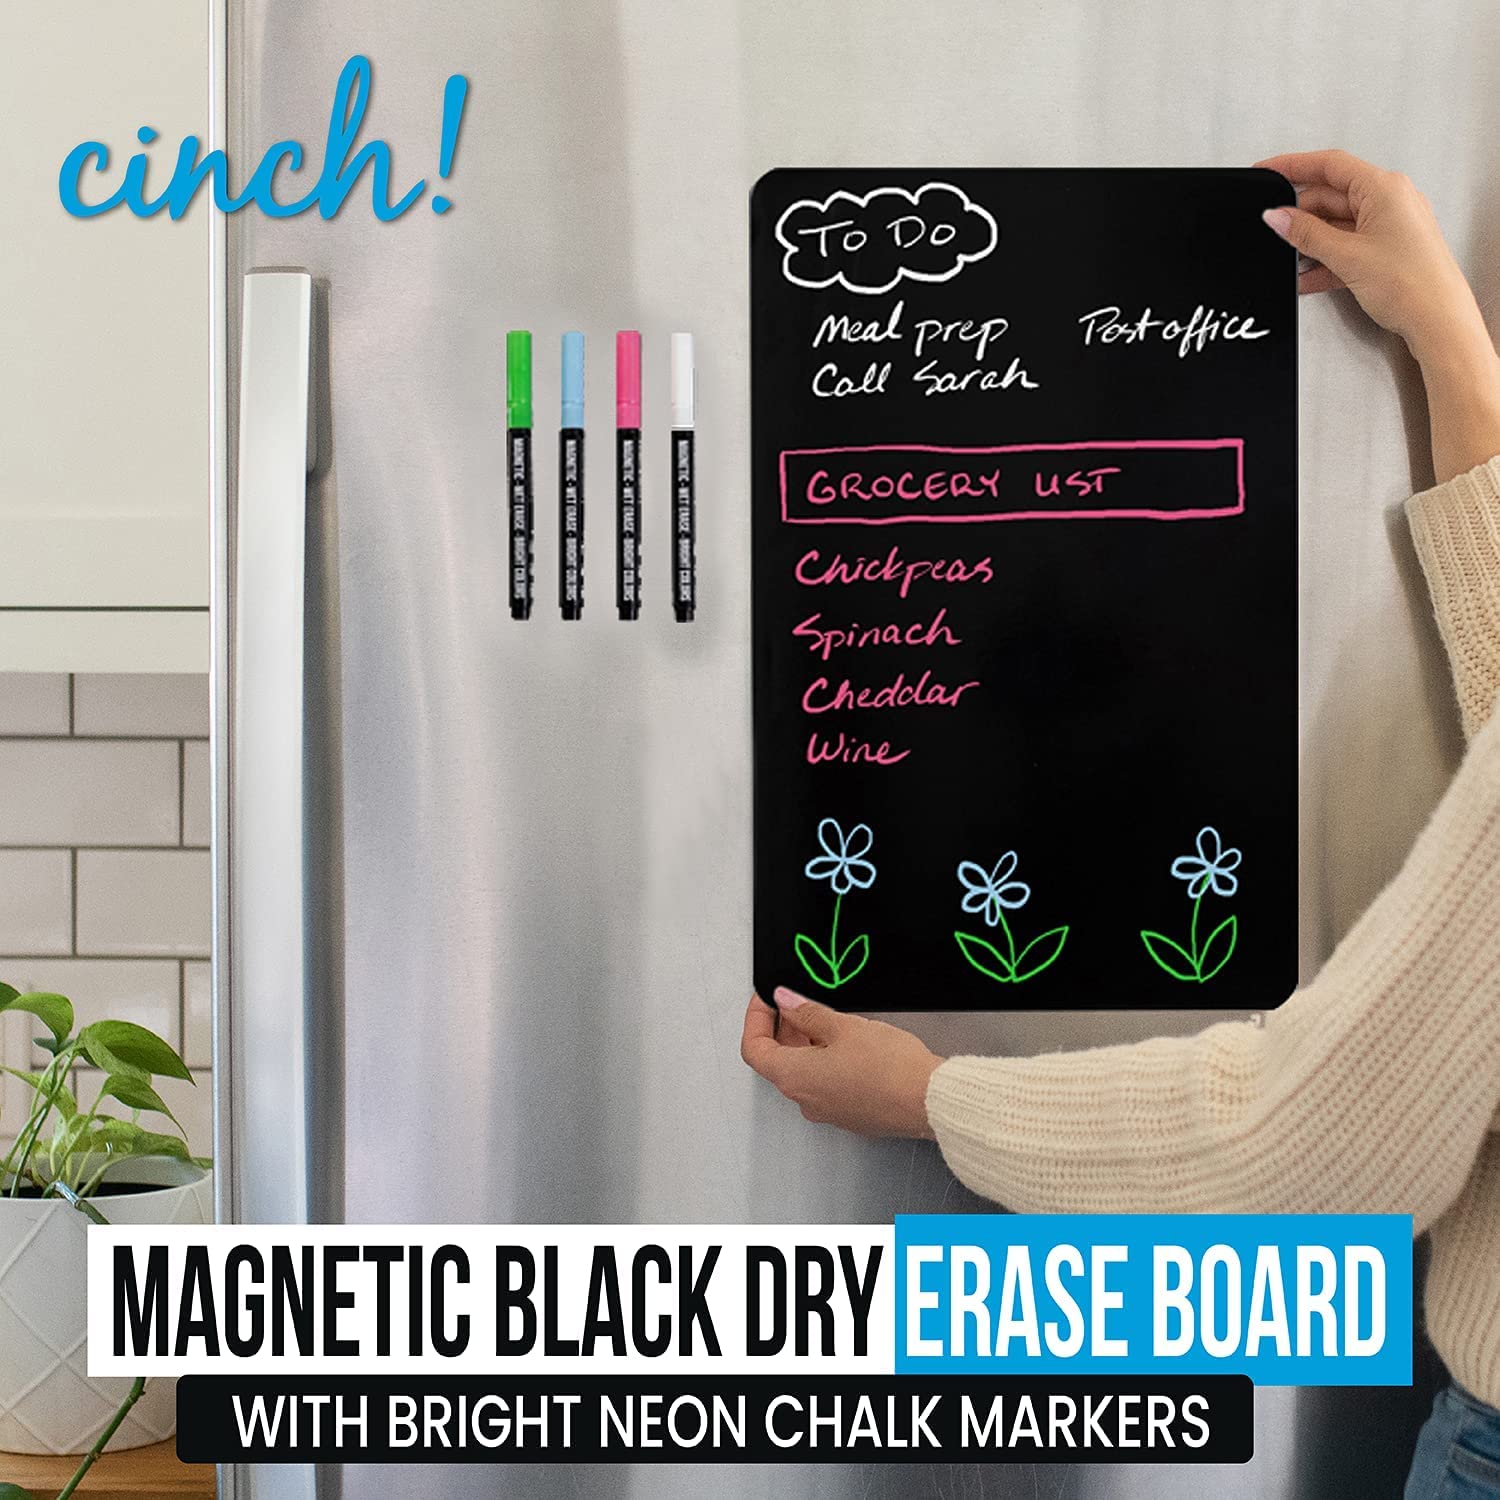 Cinch 17x11 Fridge Whiteboard Magnetic - Plus 4 Markers - Magnetic White Board for Refrigerators, Magnetic Fridge Dry Erase Board, Refrigerator Whiteboard Magnetic Organizer & Planner  - Like New